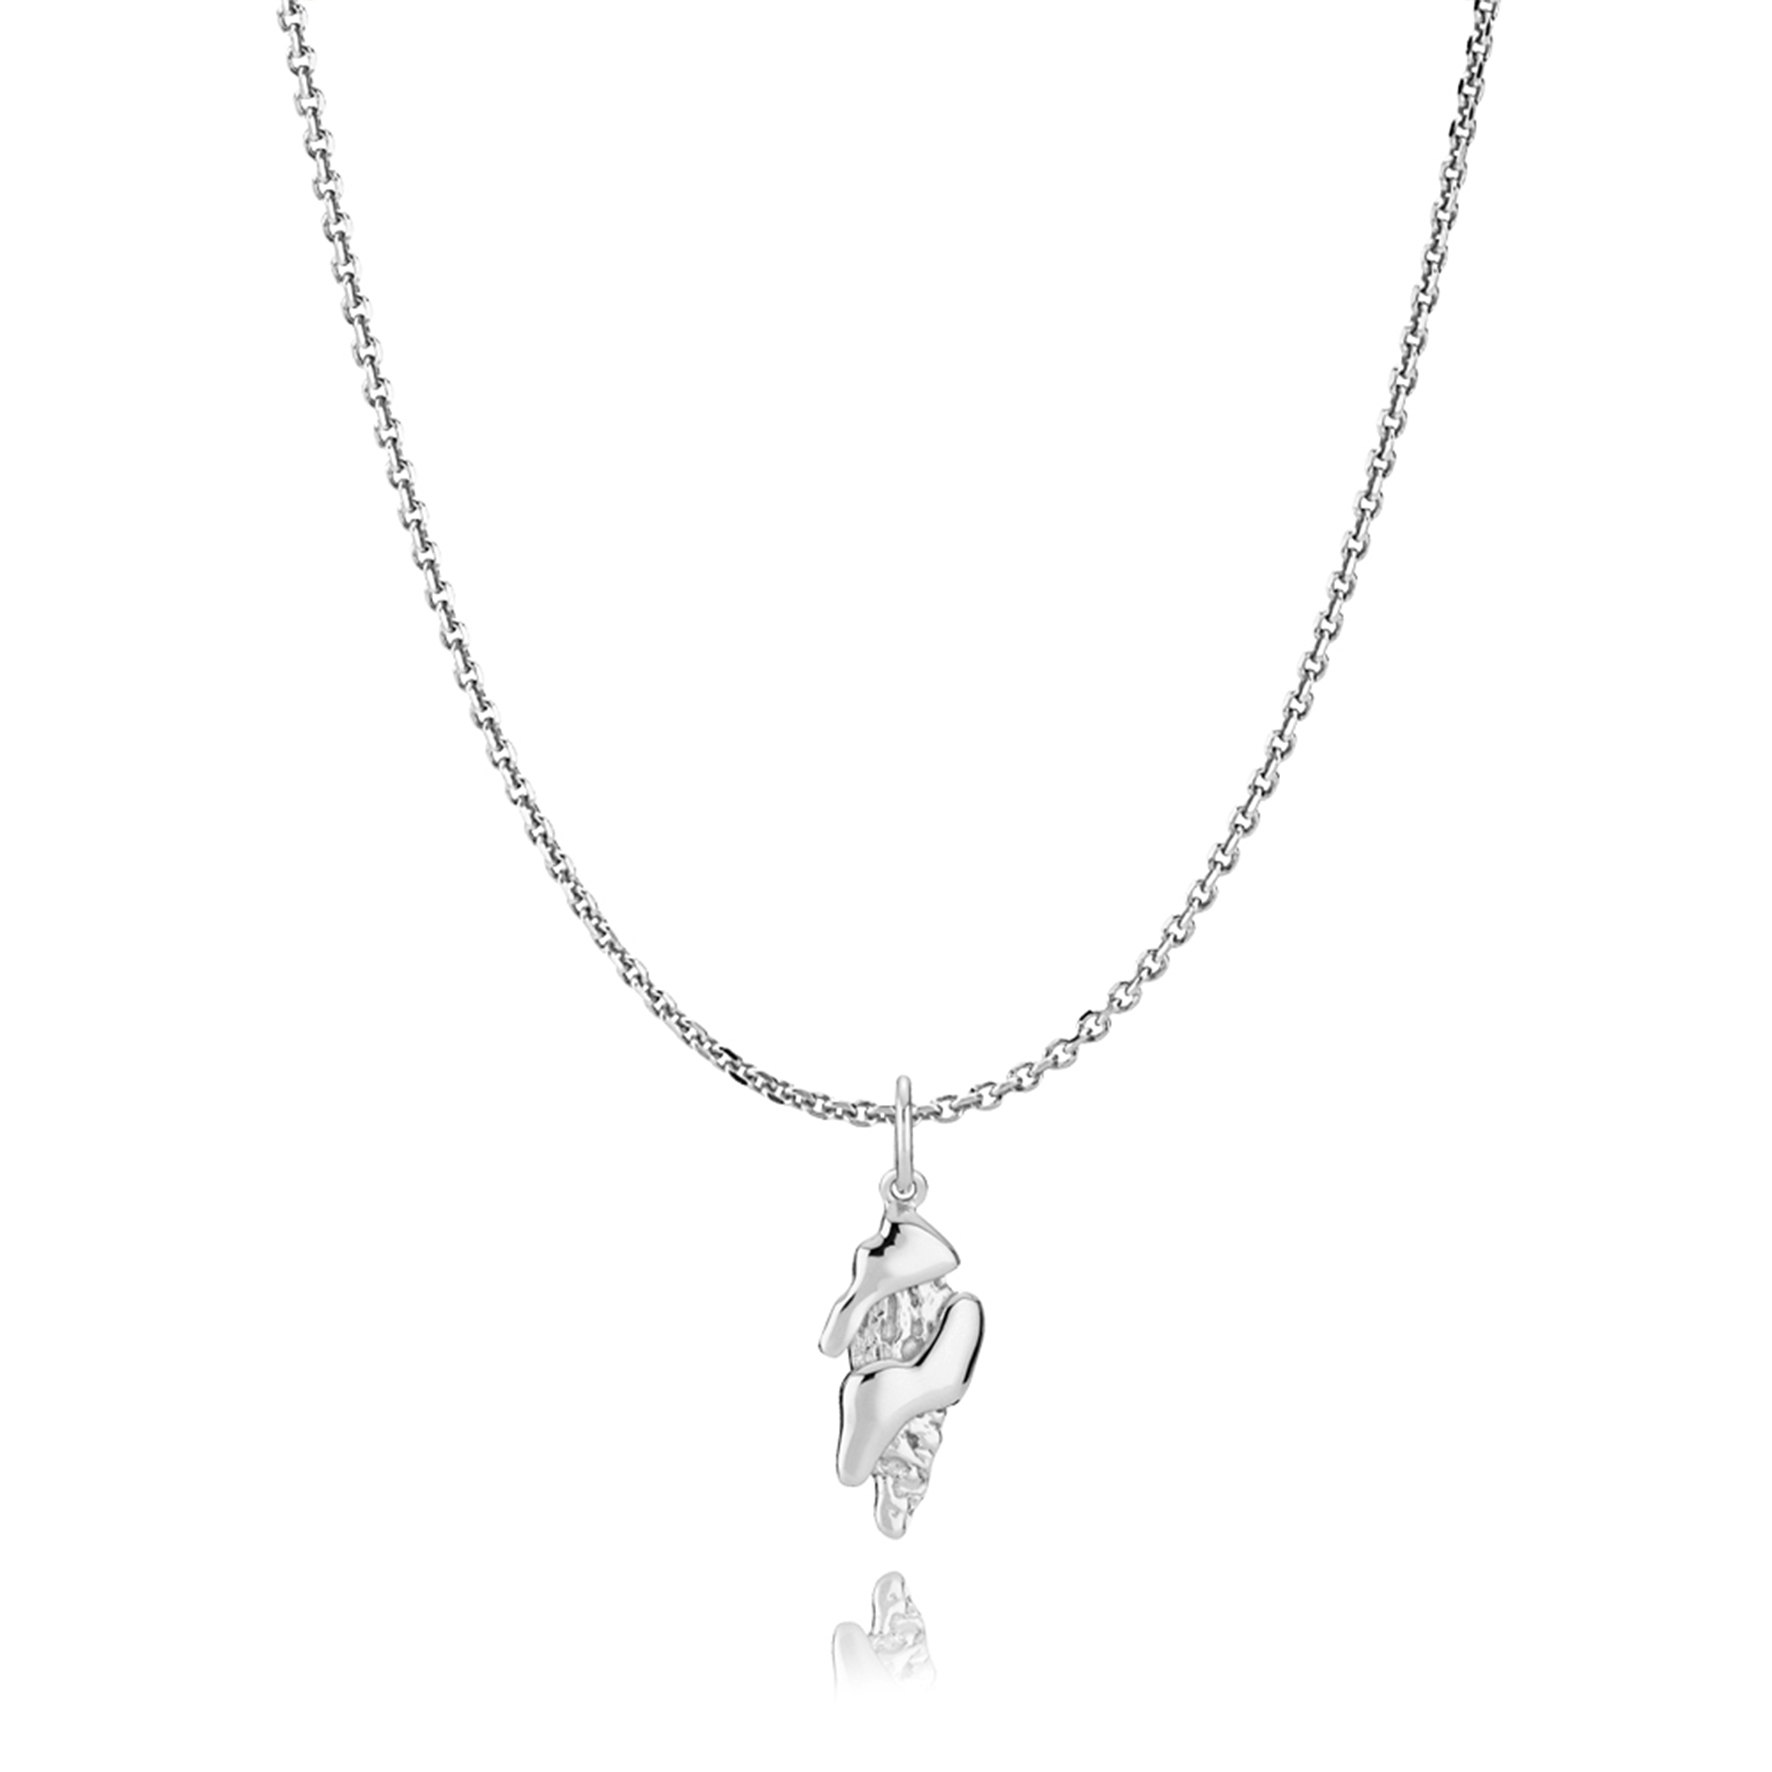 Josephine Livin By Sistie Necklace With Pendant fra Sistie i Sølv Sterling 925